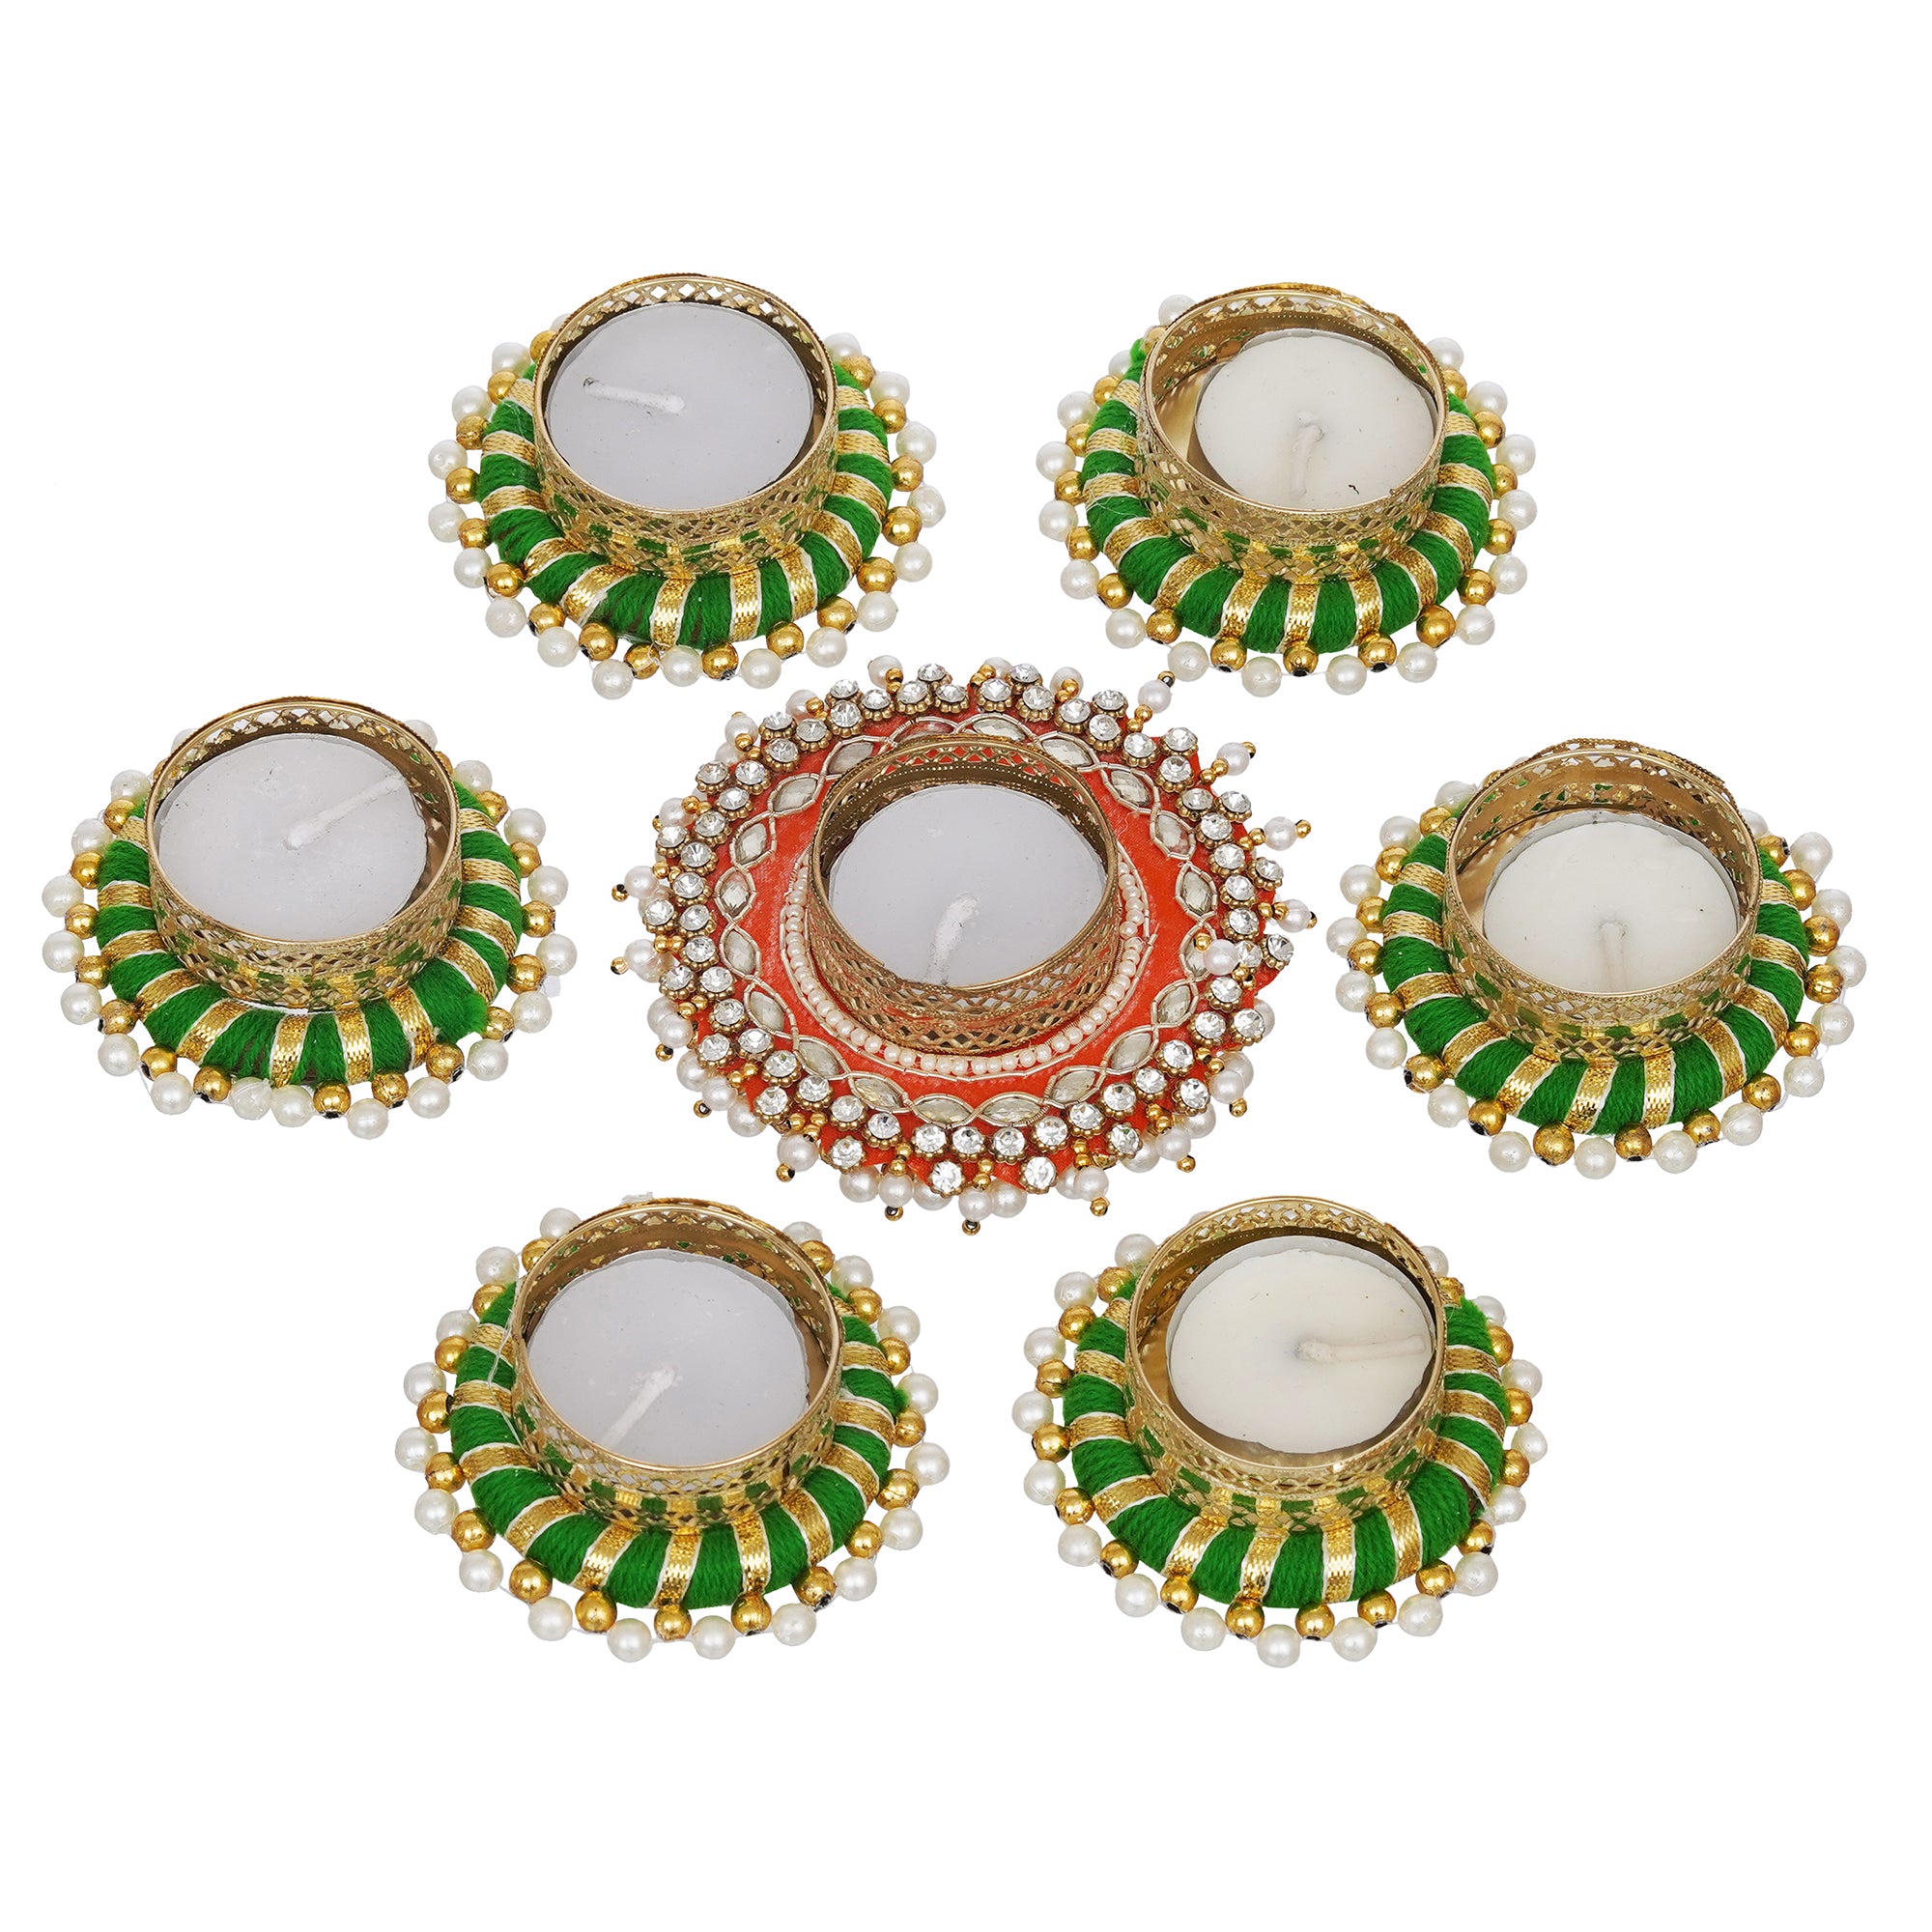 eCraftIndia Set of 7 Round Shaped Diamond Beads and Pearls Decorative Tea Light Candle Holders 2